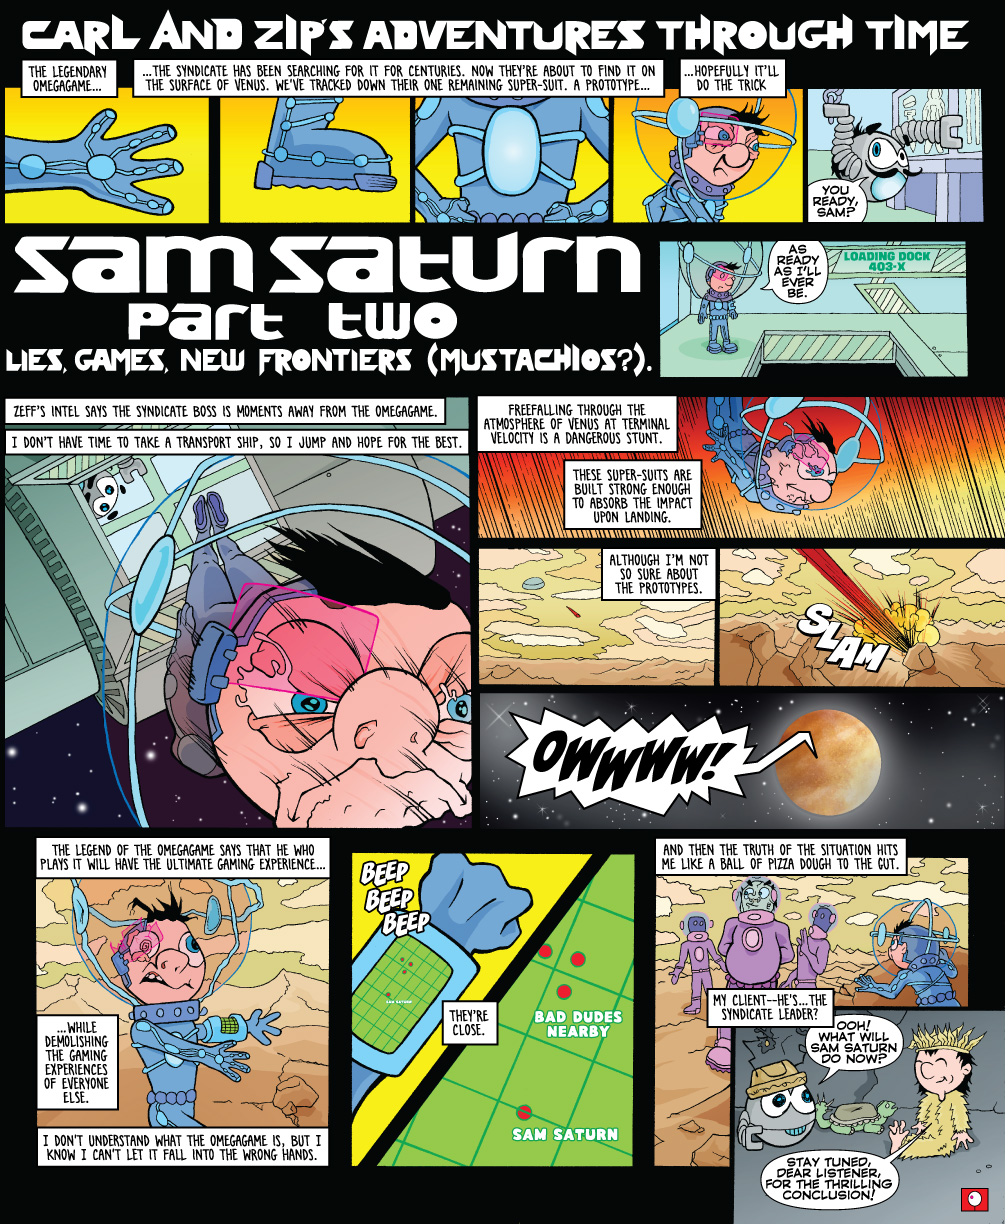 Sam Saturn–Part Two!